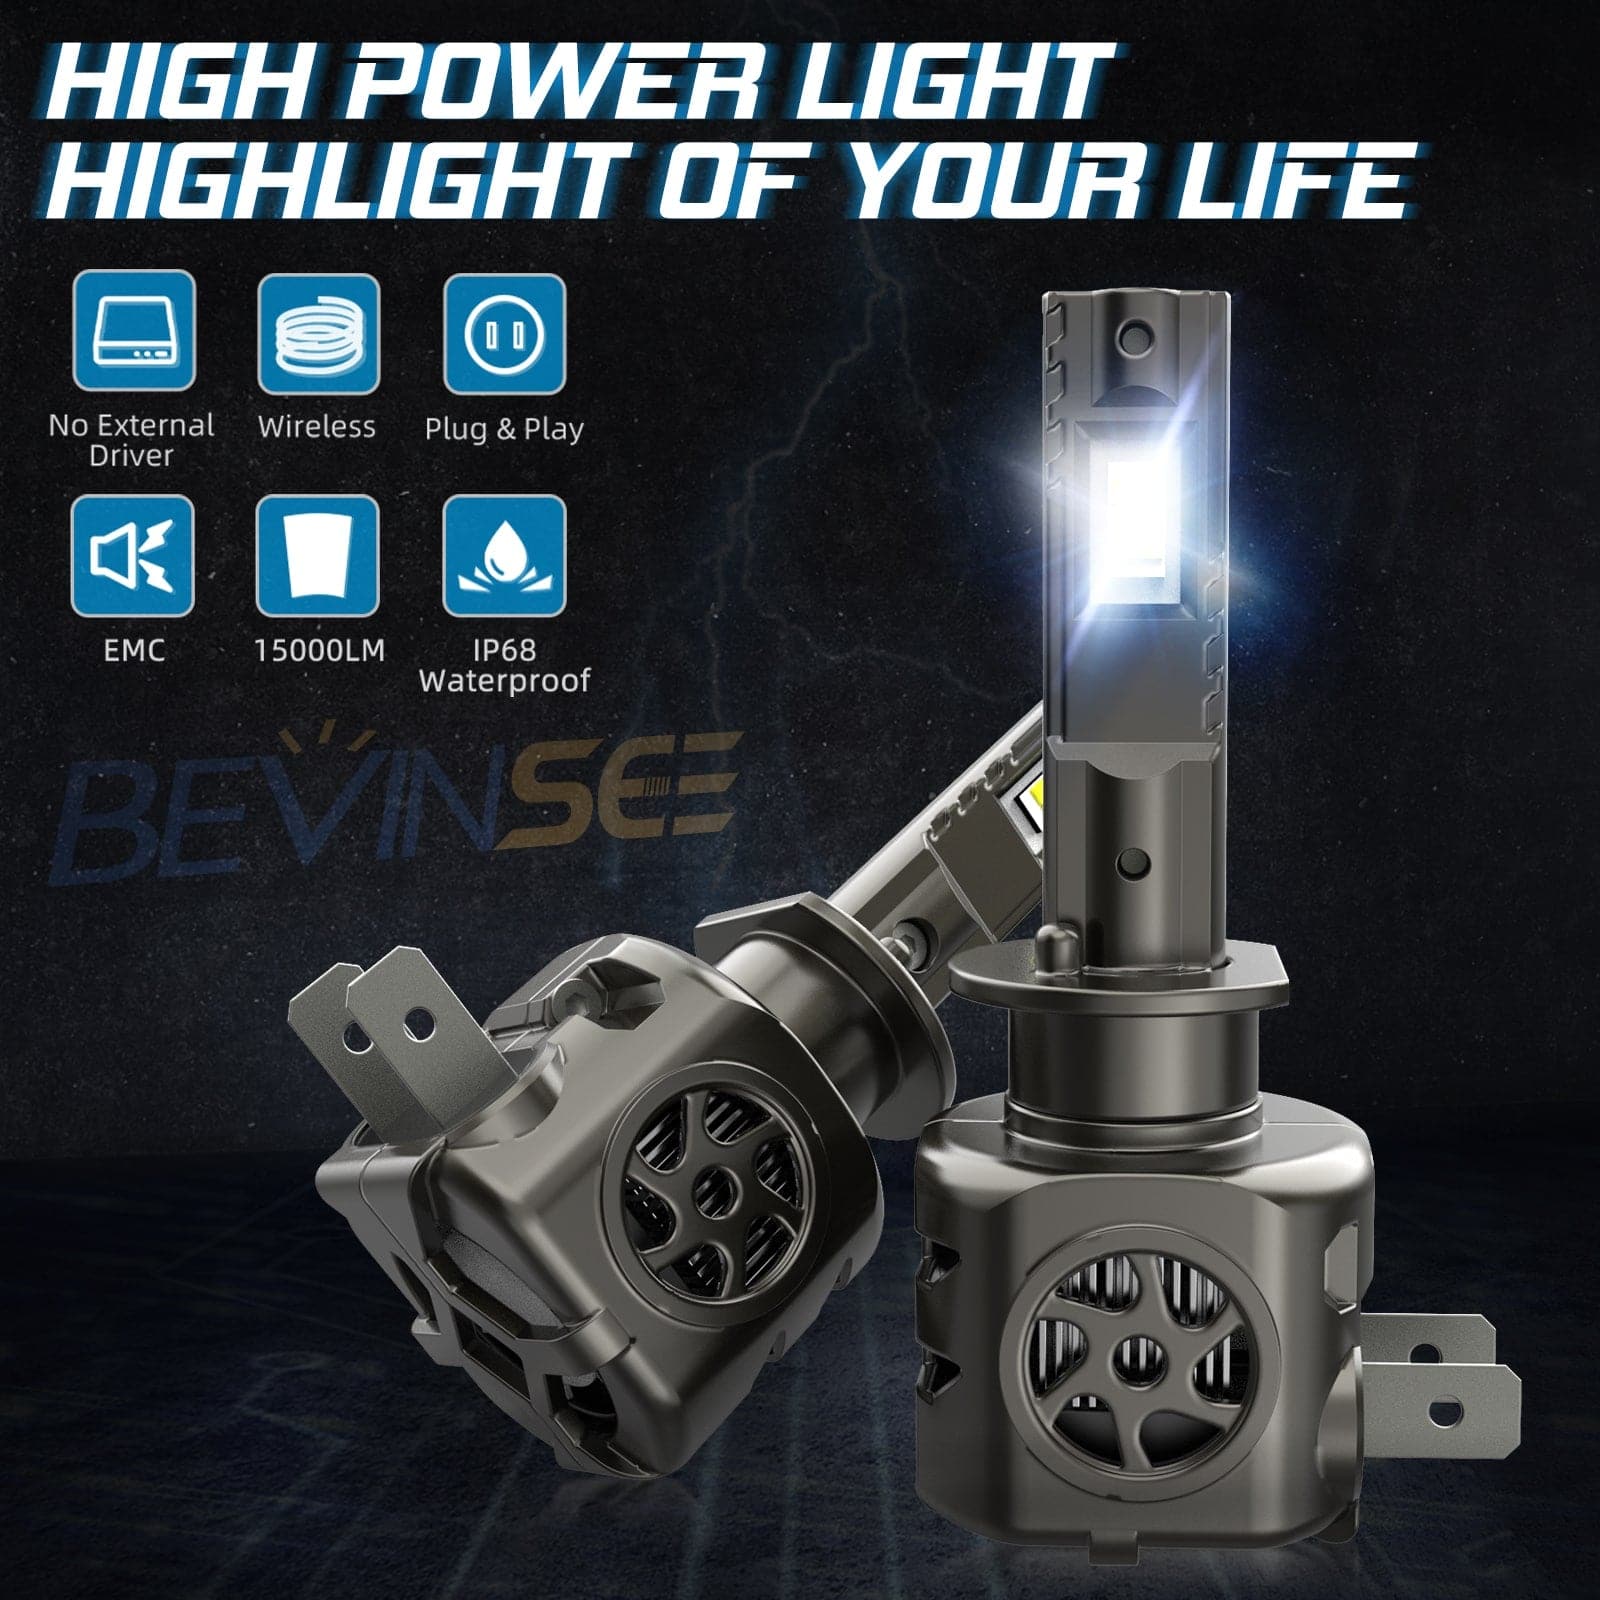 BEVINSEE S550 H1 LED Headlight Foglight Bulbs DRL Fog Lamp 10000LM